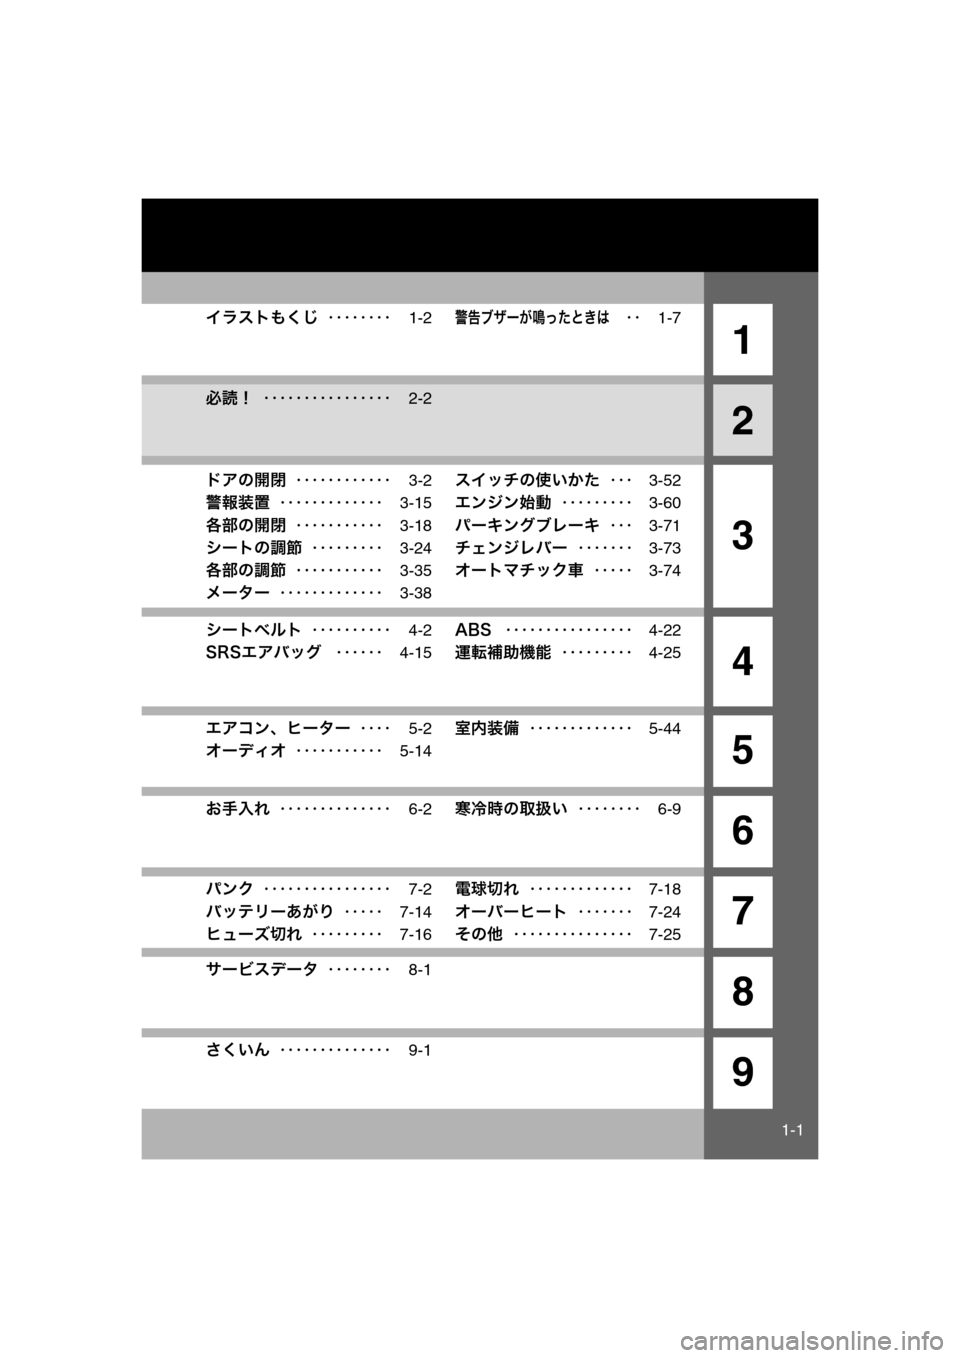 MAZDA MODEL AZ-WAGON 2012  ワゴン｜取扱説明書 (in Japanese) 1-1
1
2
3
4
5
6
7
8
9
イラストもくじ ････････  1-2警告ブザーが鳴ったときは ･･  1-7
必読！  ････････････････  2-2
ドアの開�